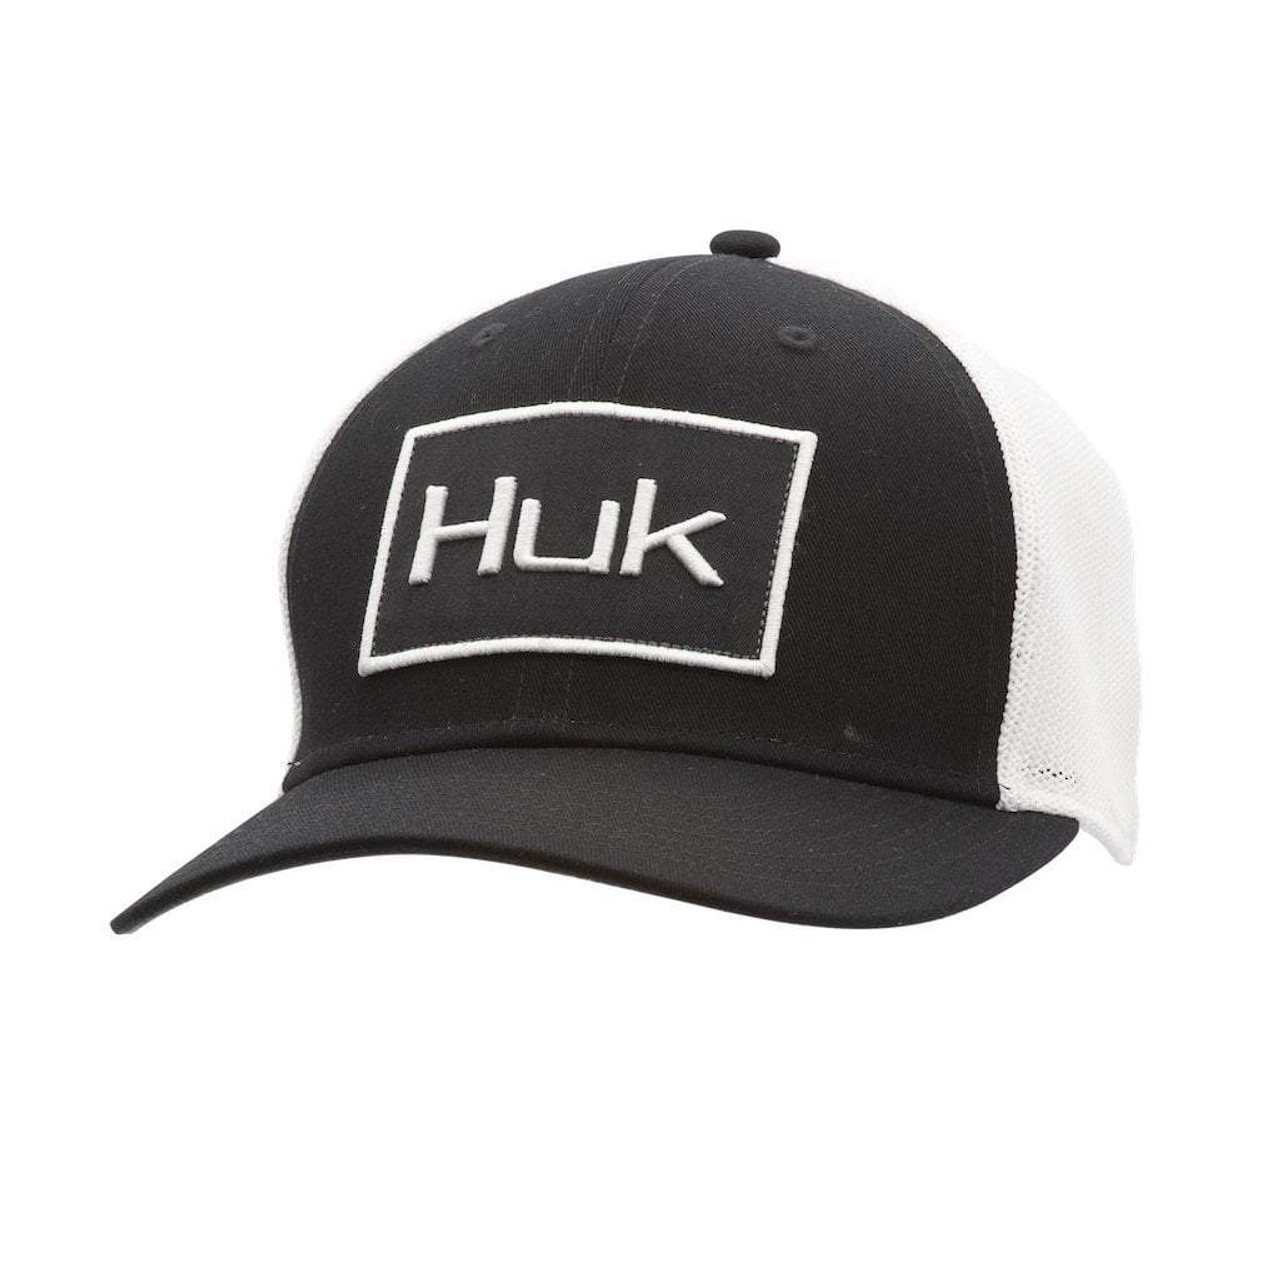 Huk Fishing Angler Trucker Stretch Fit Hat, Black/White, M/L